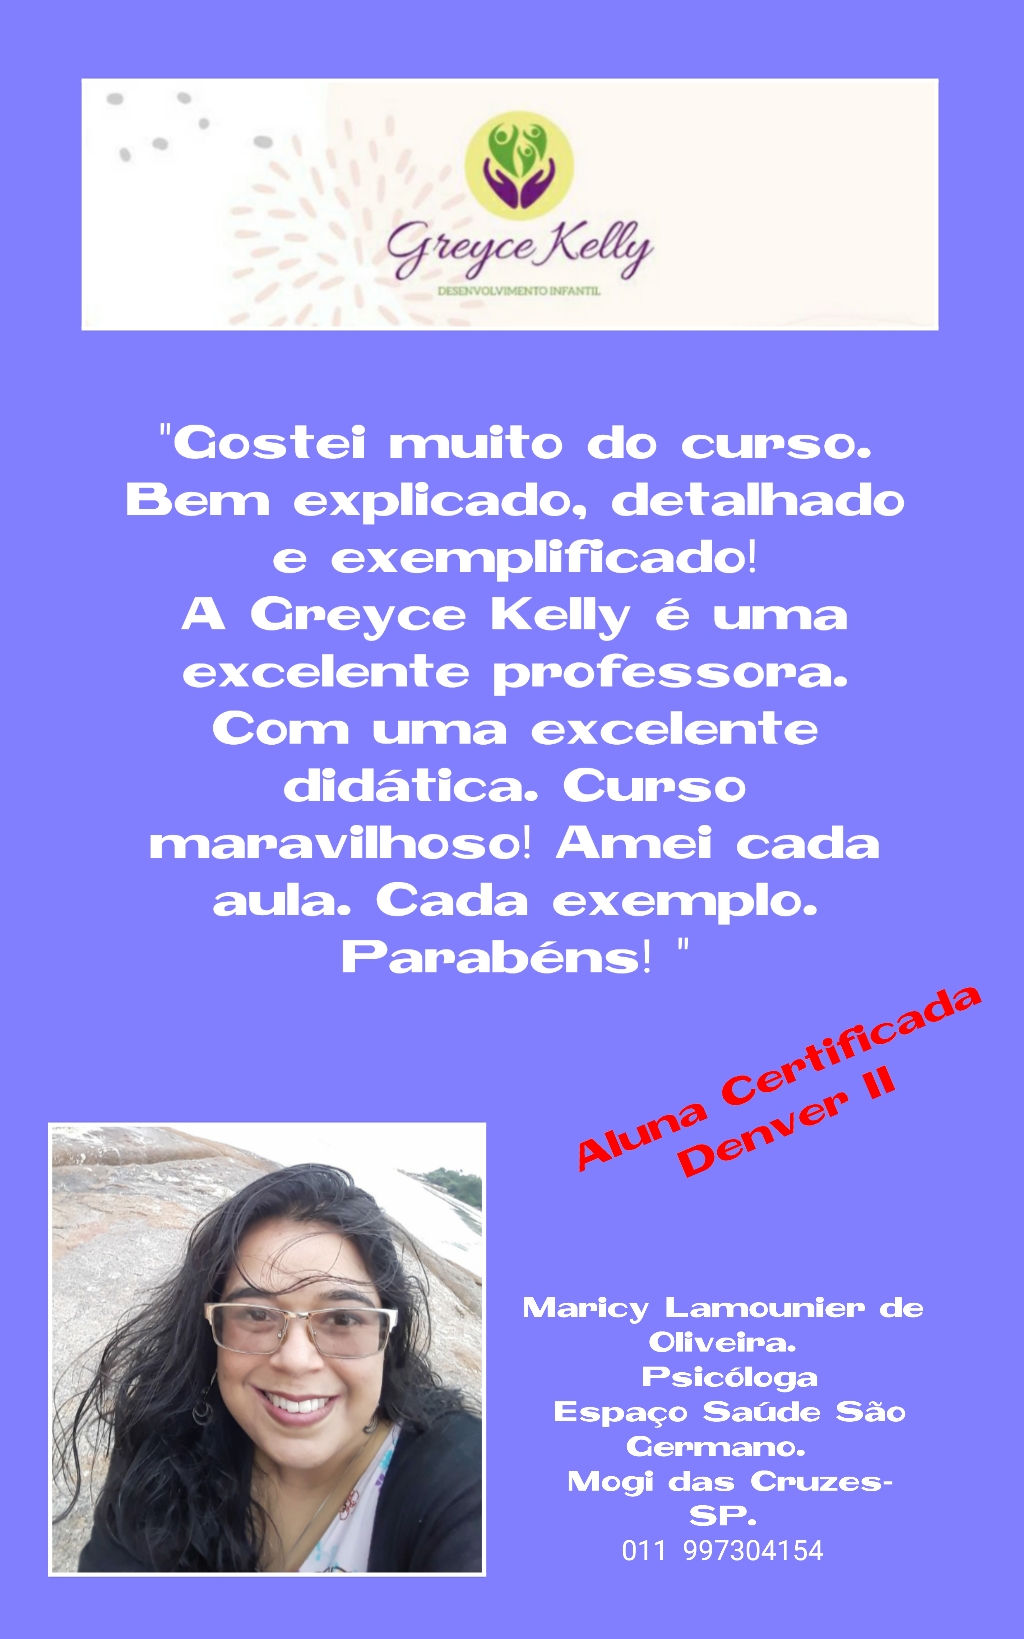 Maricy Lamounier de Oliveira